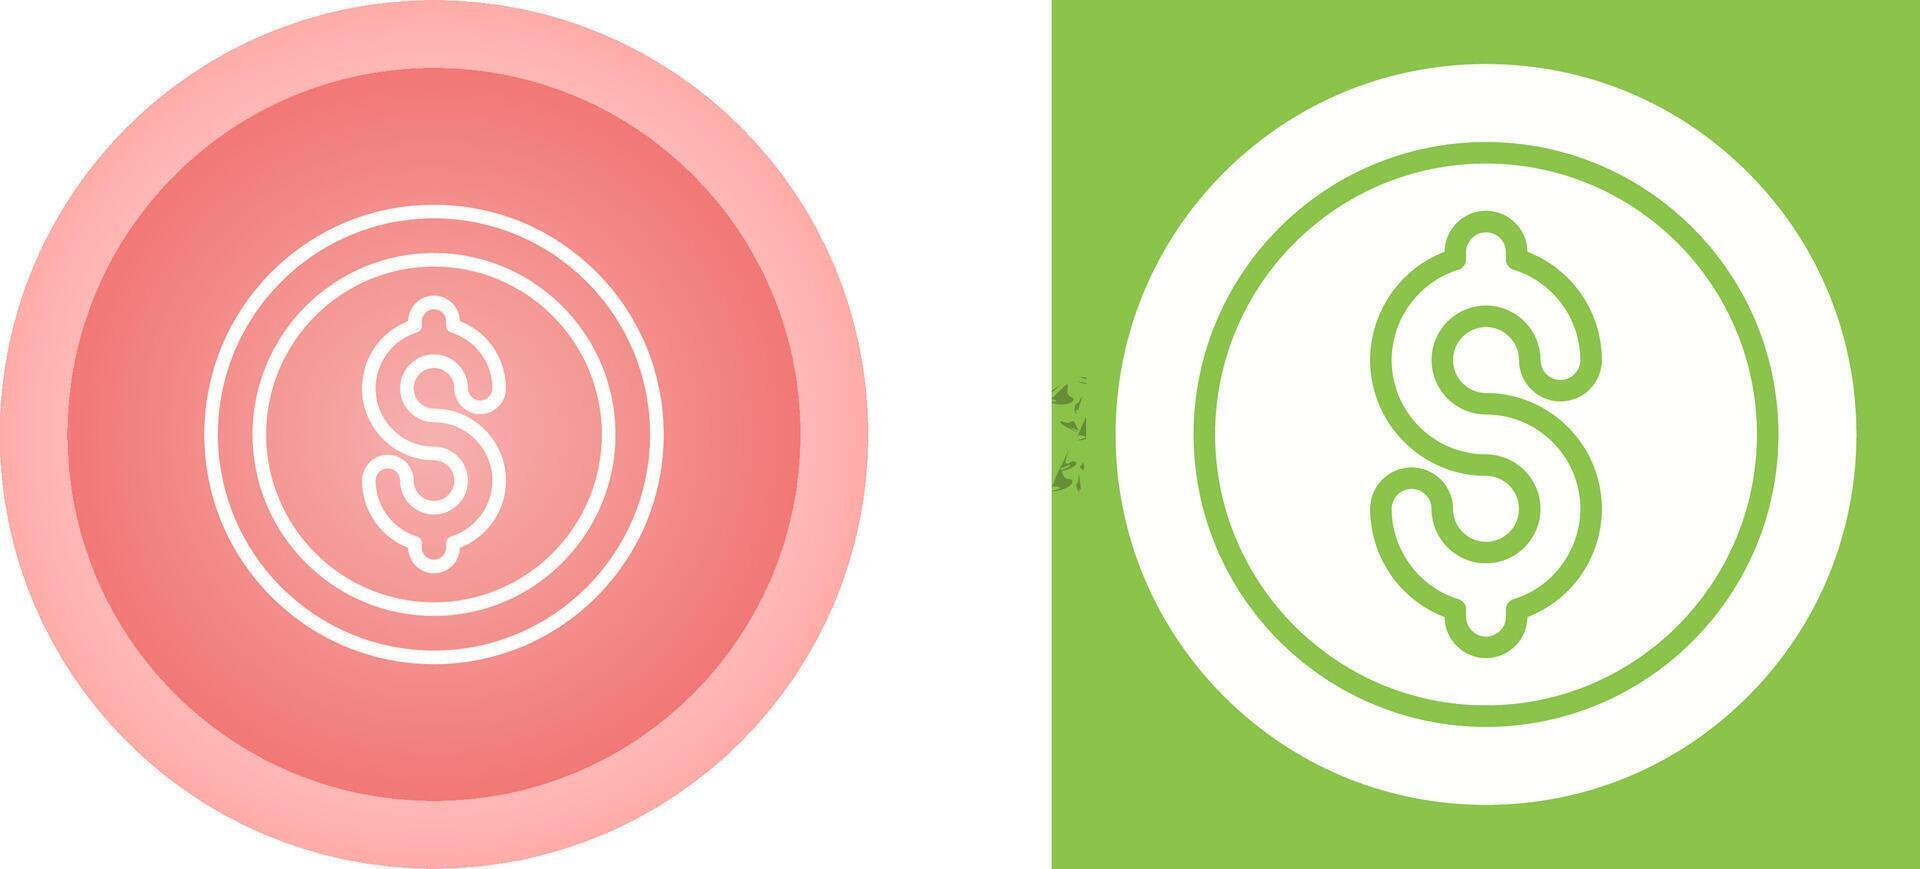 Usd Circle Vector Icon